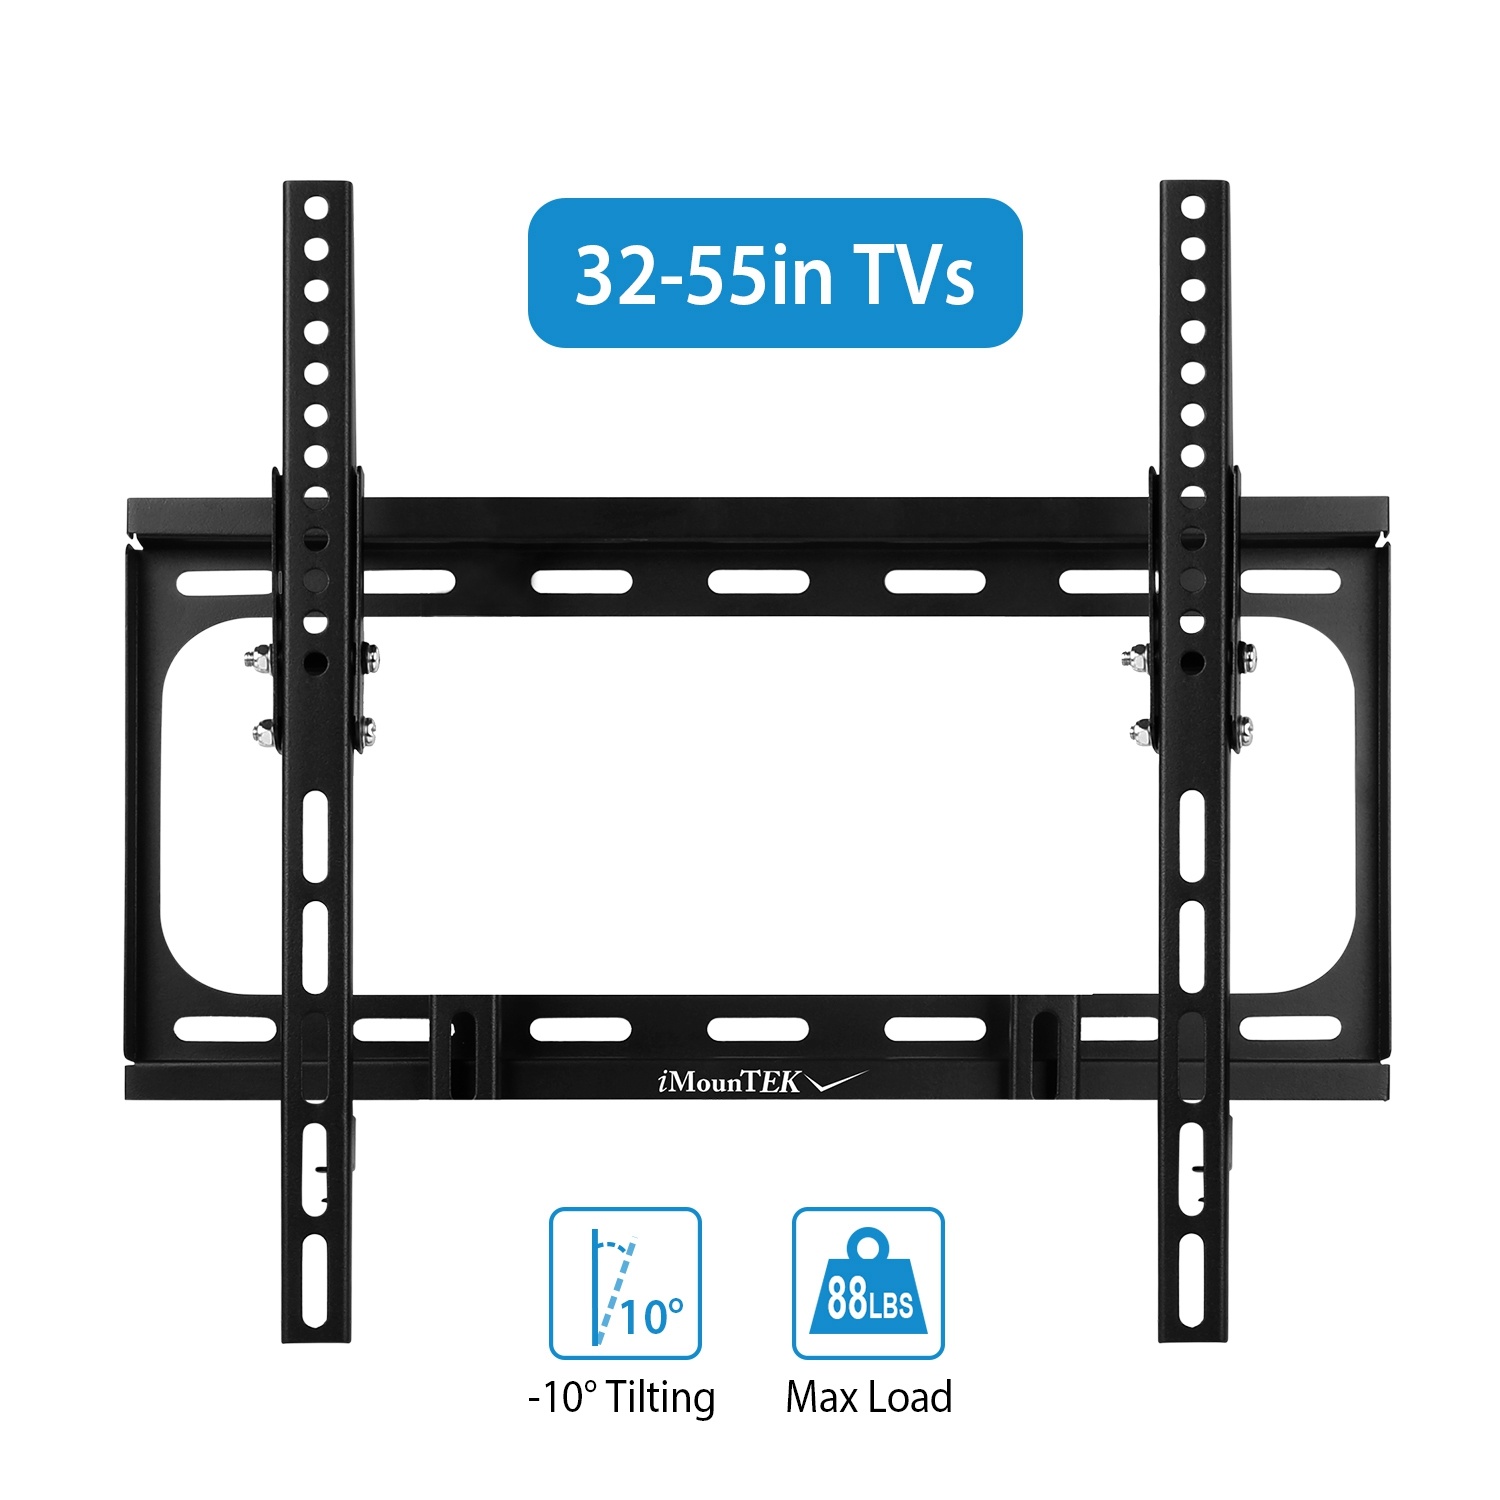 TV Wall Mount Tilt Dual Arm TV Mount Brackets Maximum VESA 400x400mm For 32-55in TVs